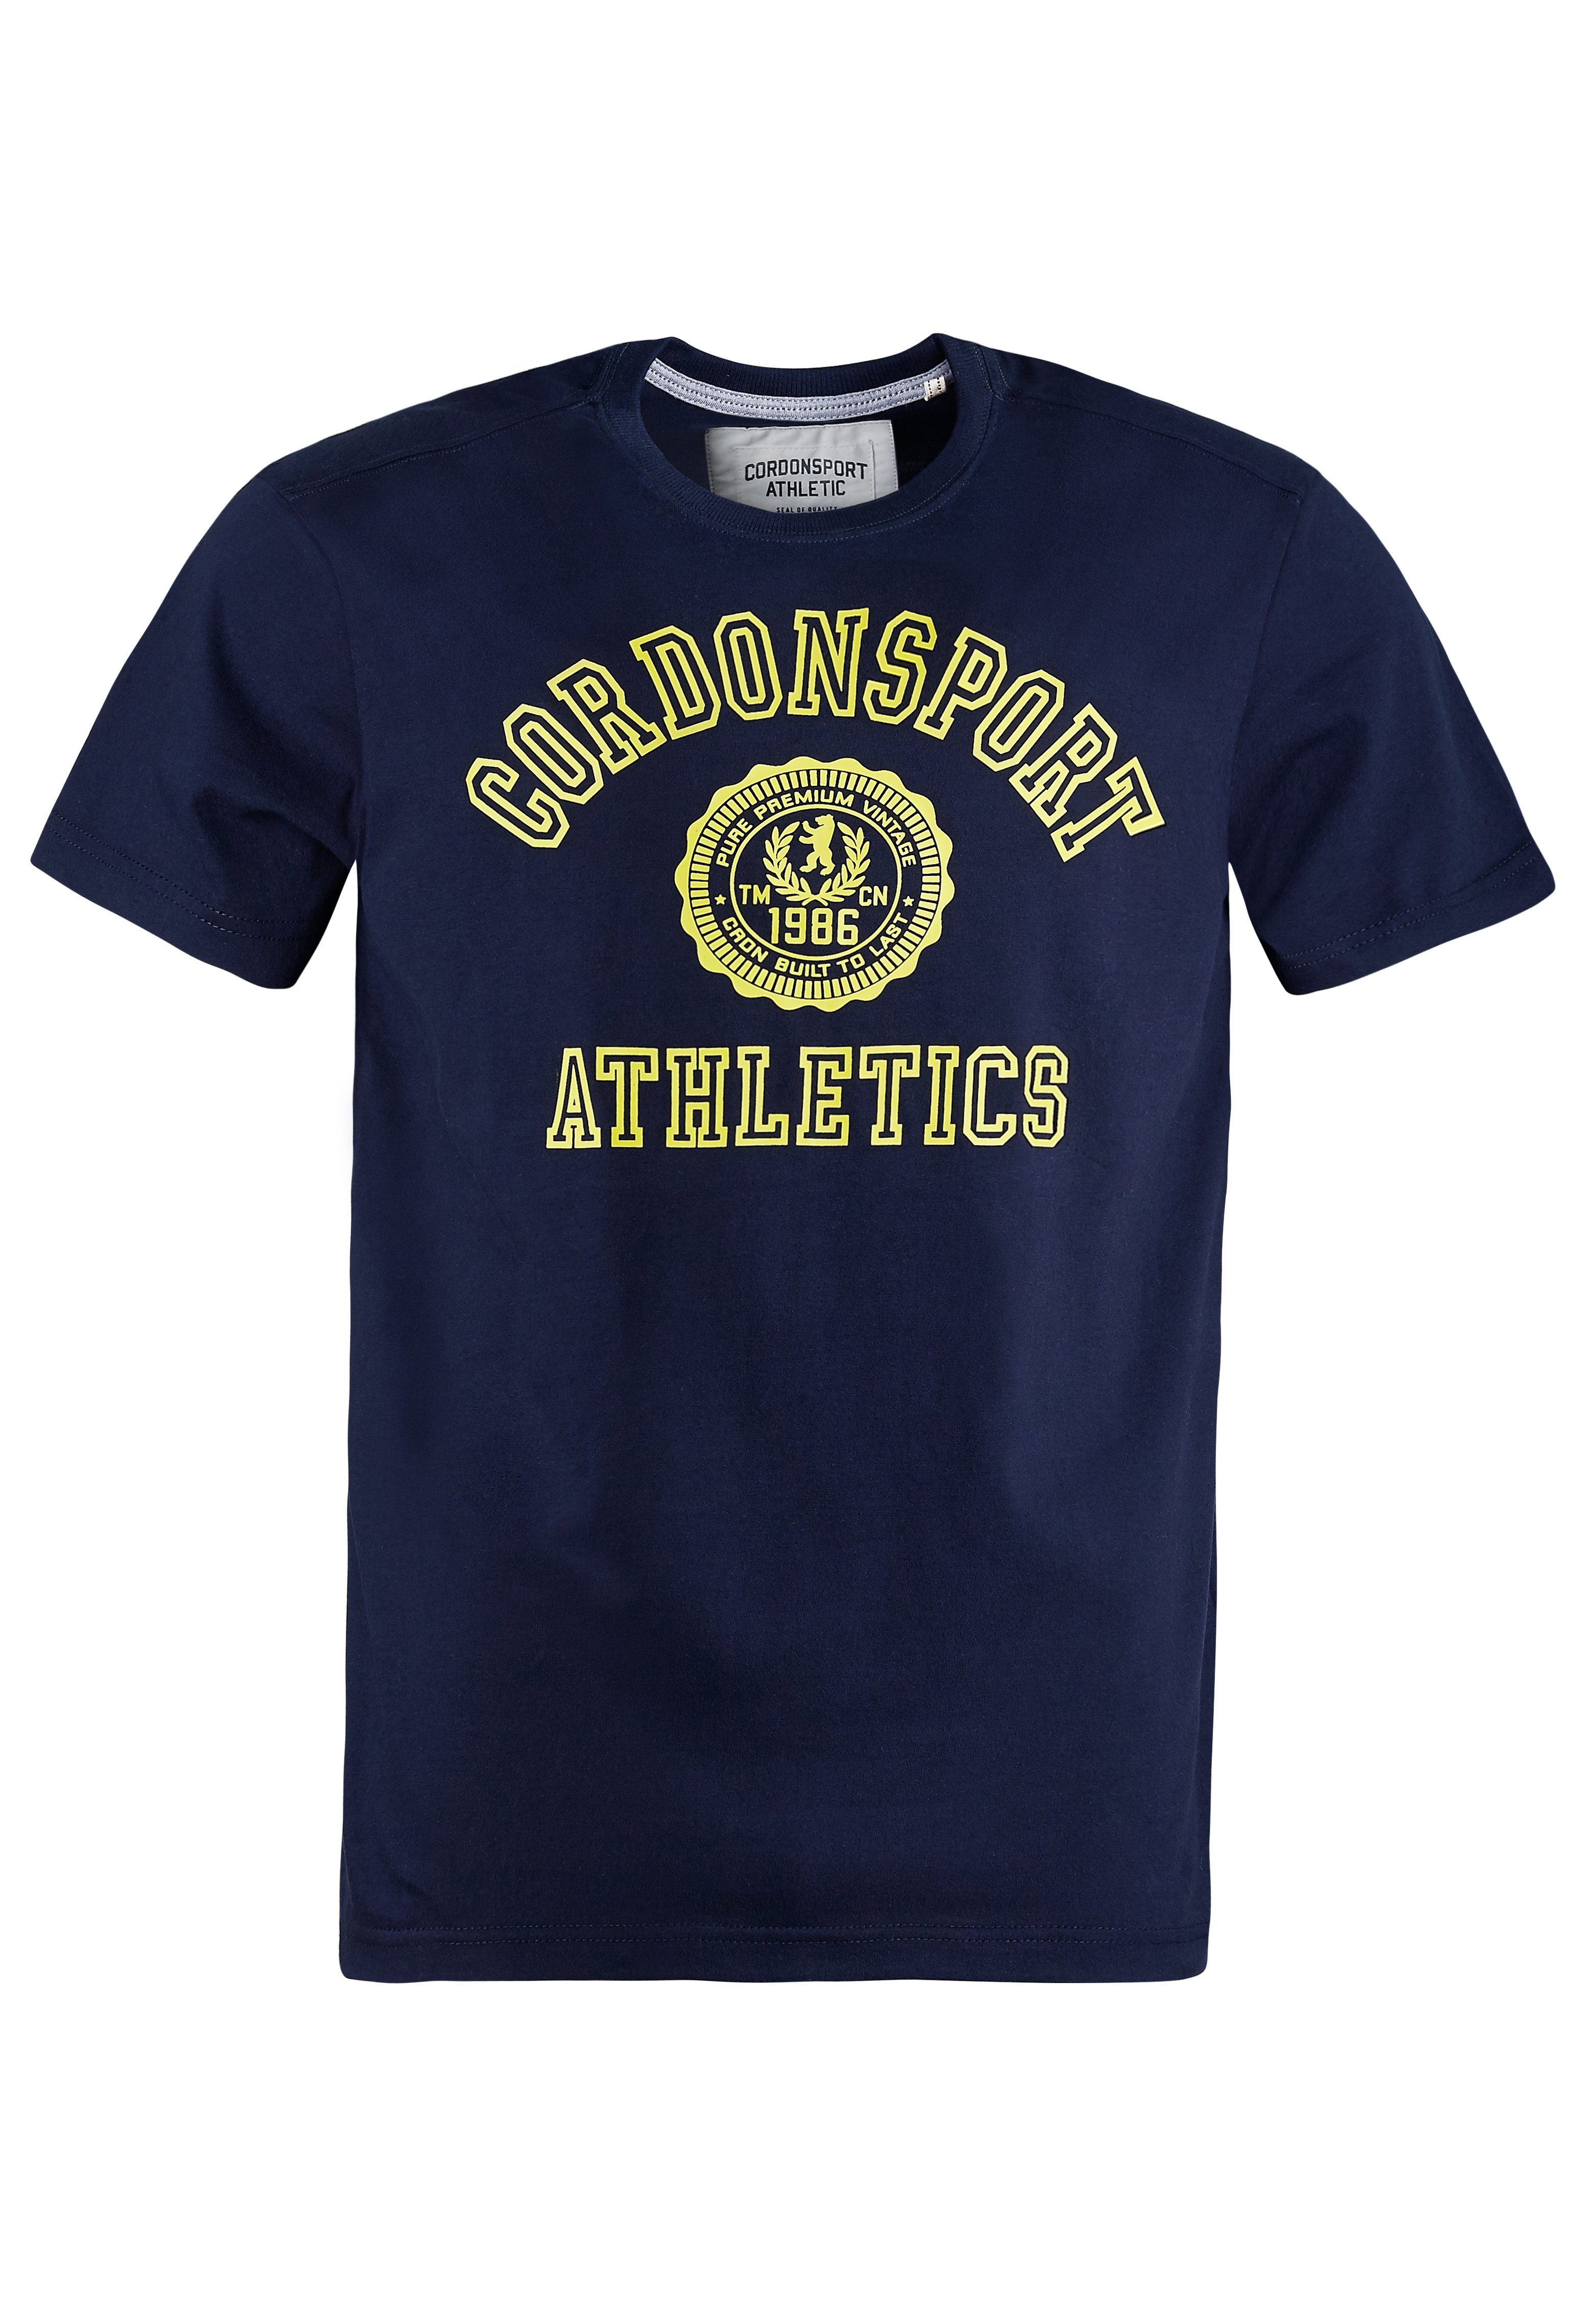 Cordon Sport T-Shirt OLE 060 66 navy